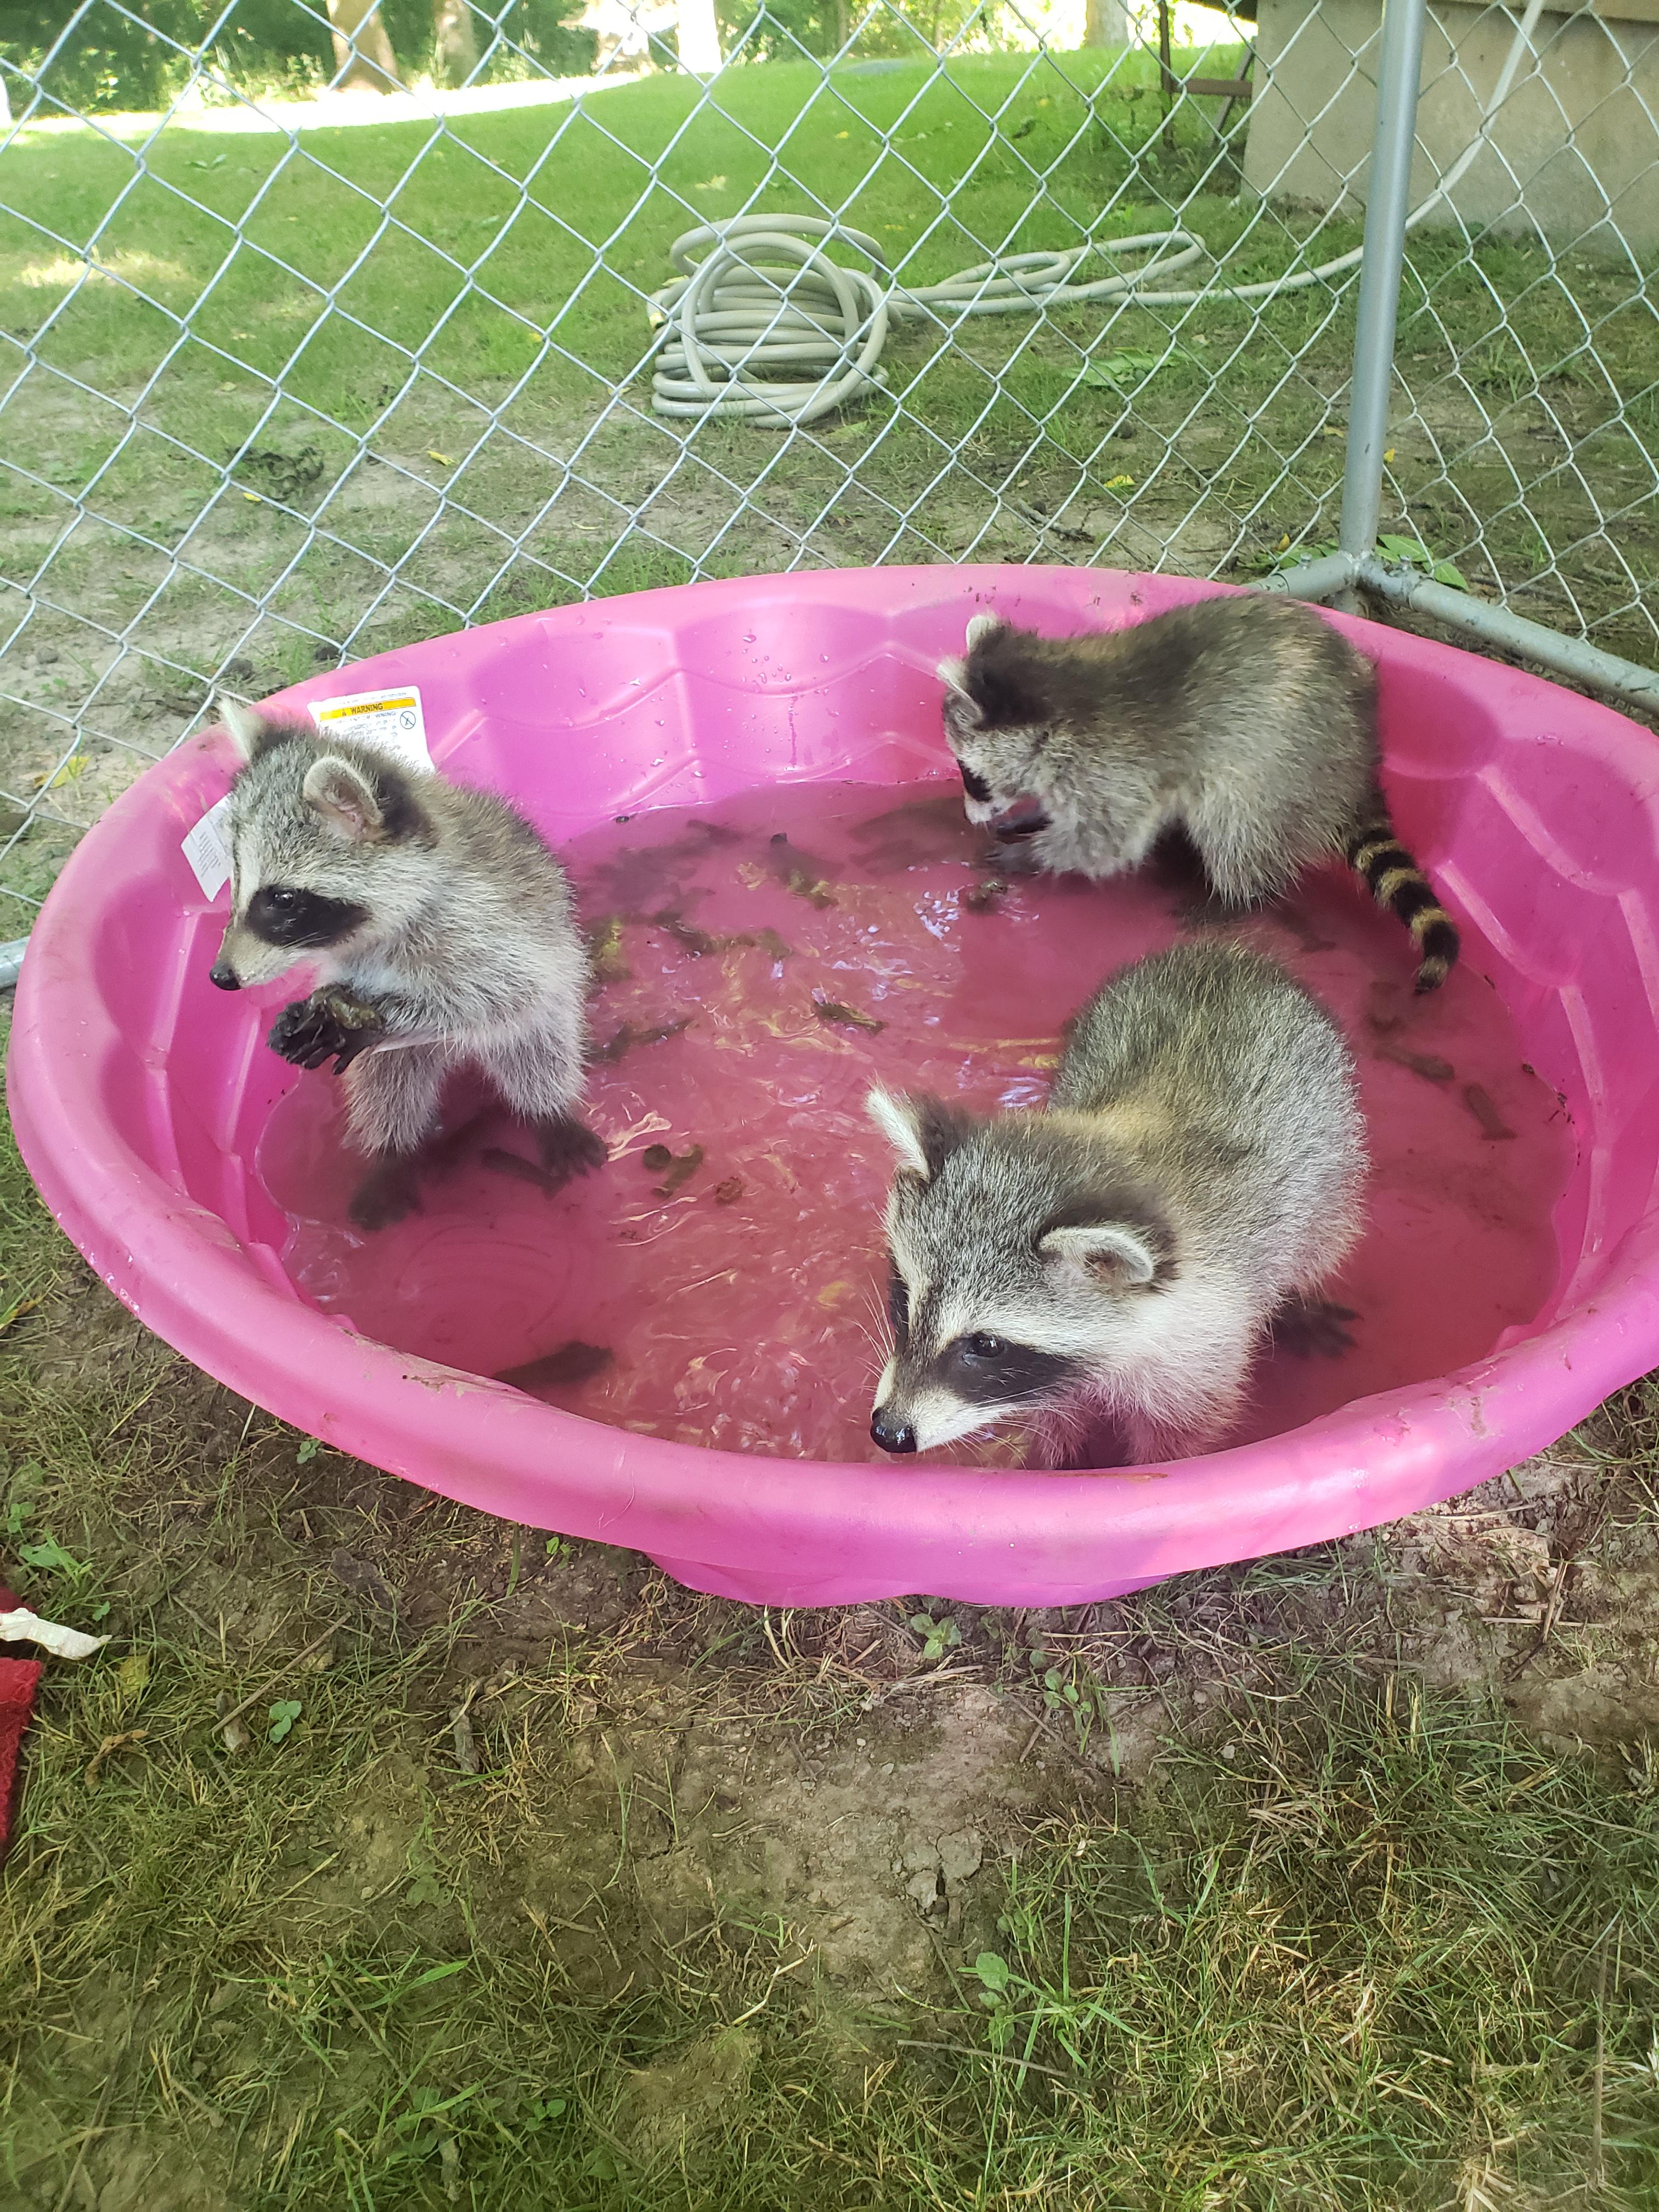 Baby raccoons in a mini pool.